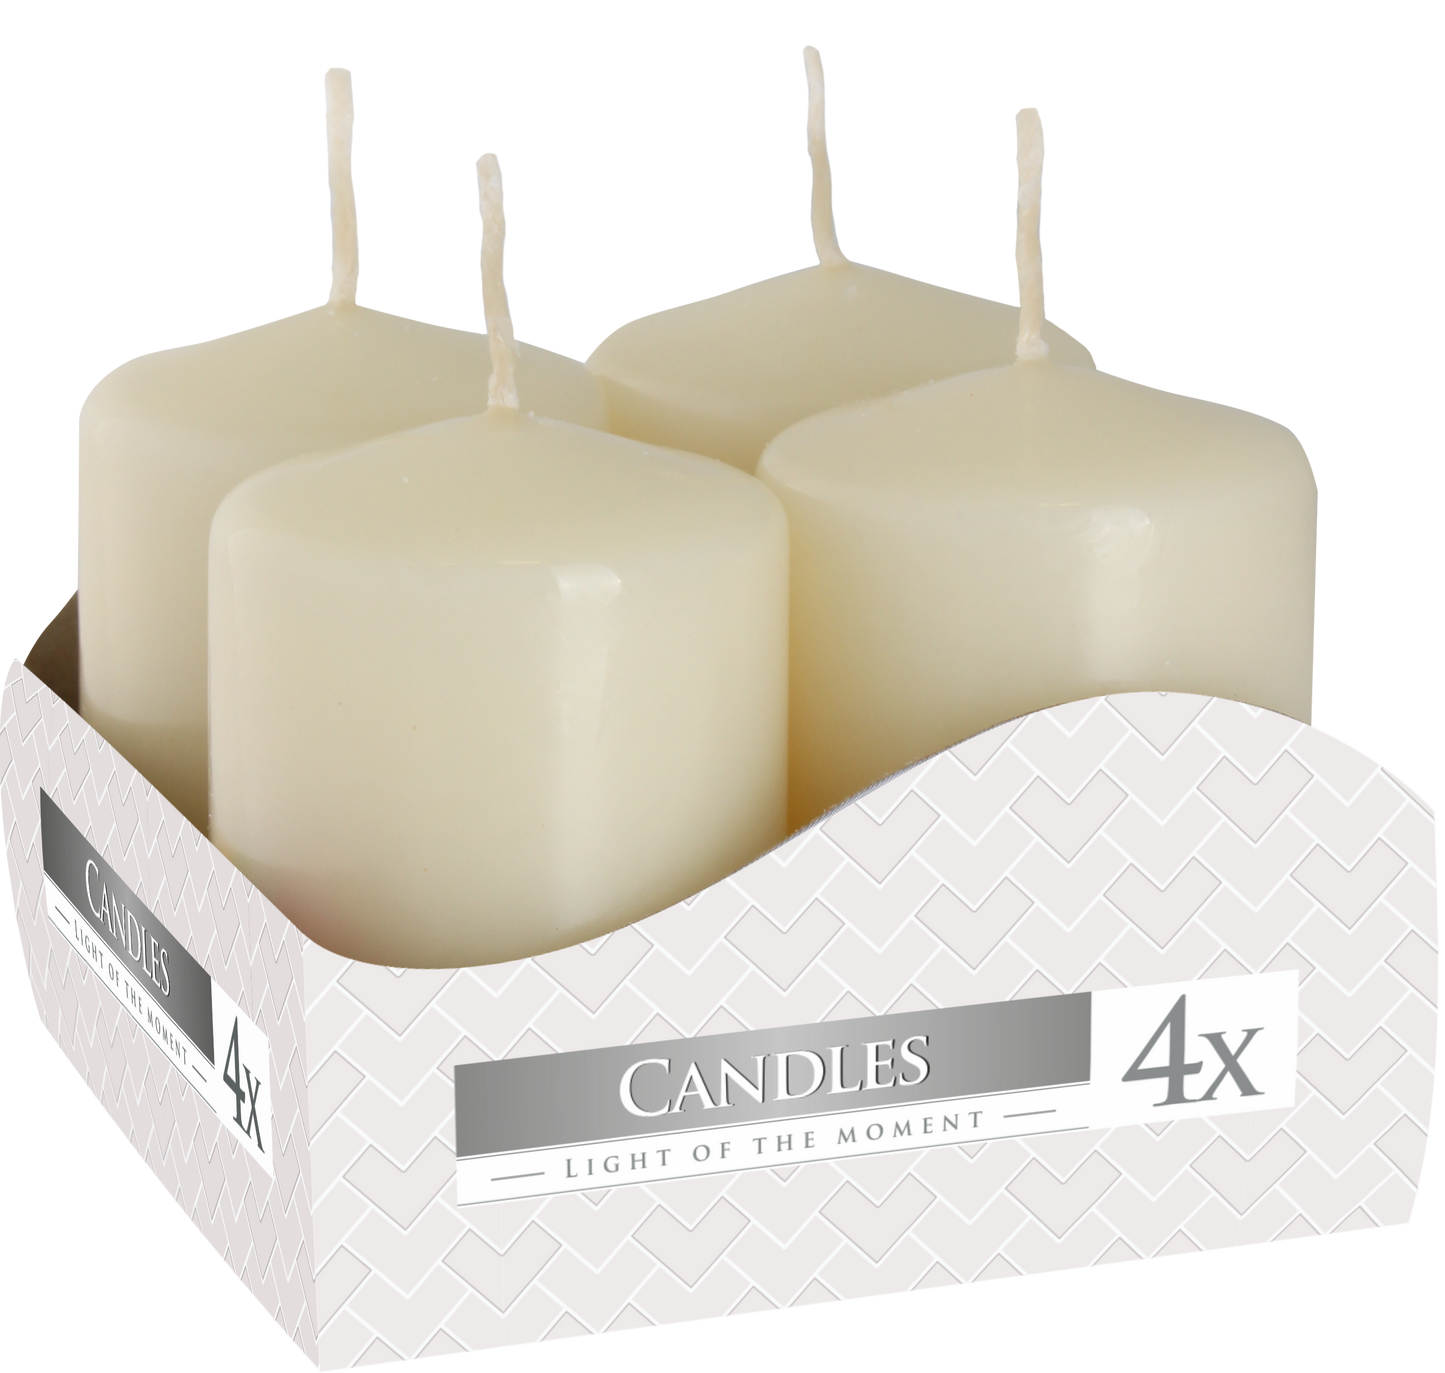 Pack de 4 velas cilíndricas color marfil de 6 x 4 cm